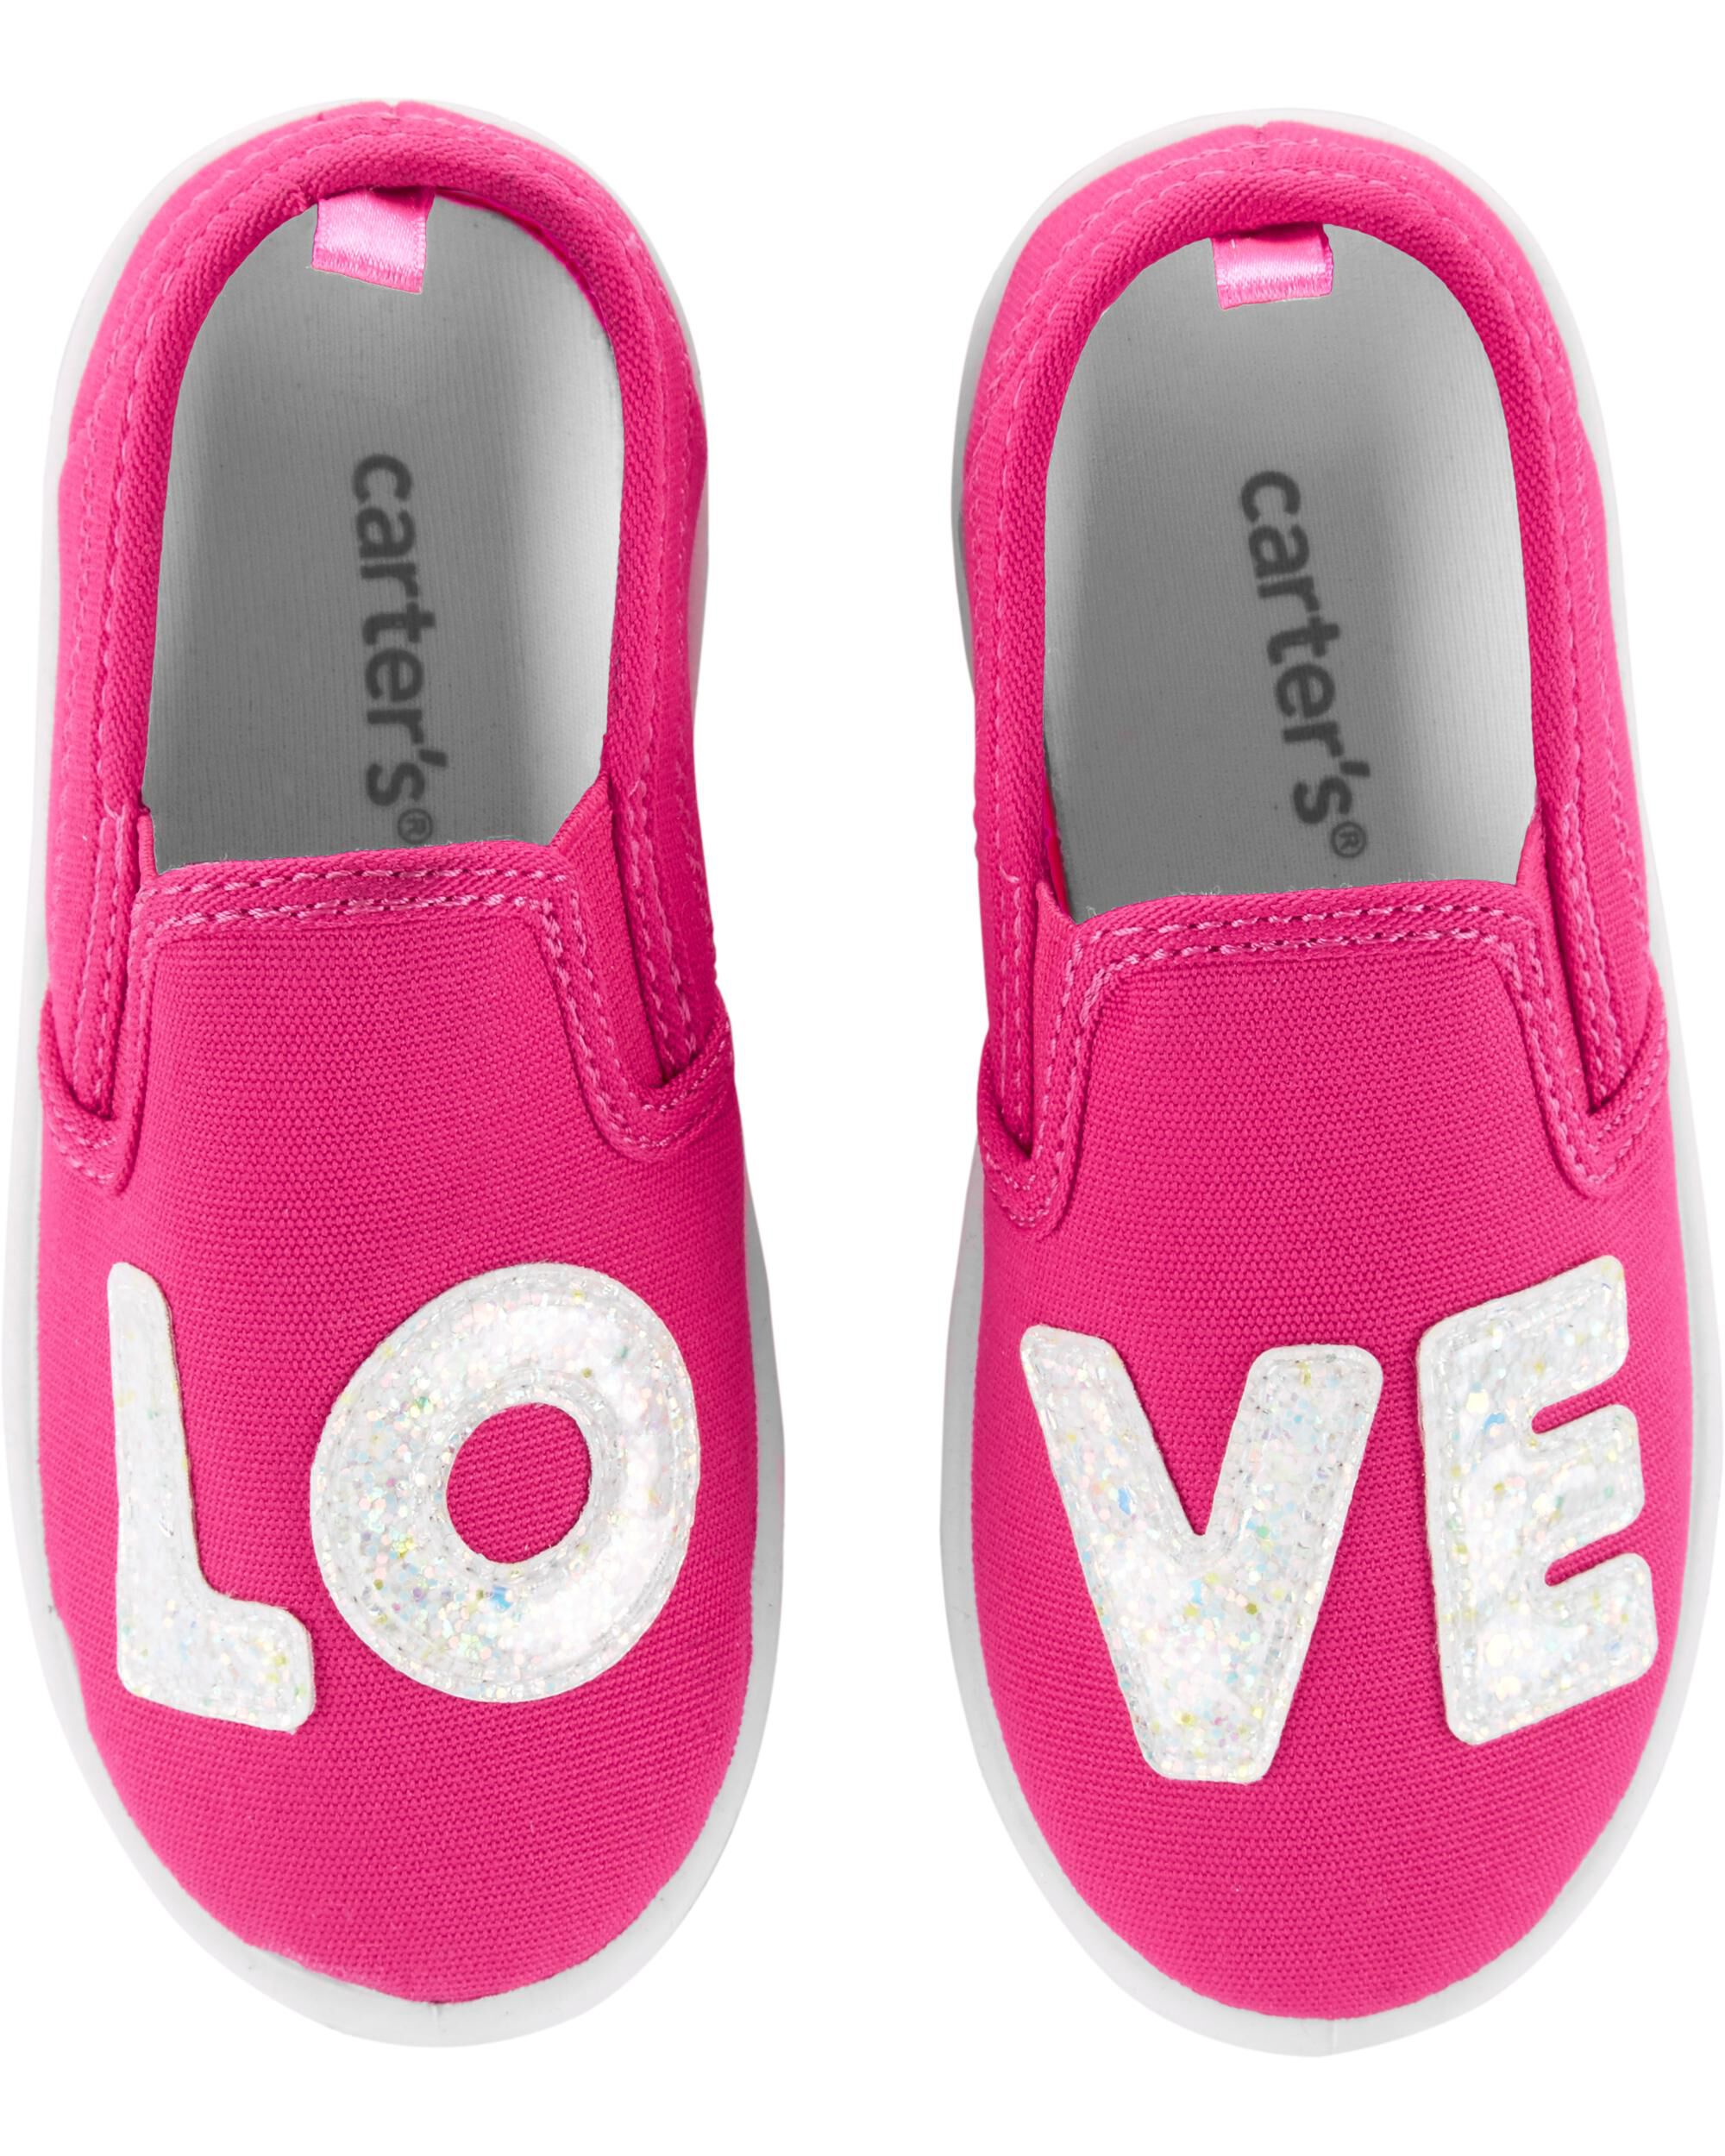 Carter's Love Casual Sneakers | carters.com